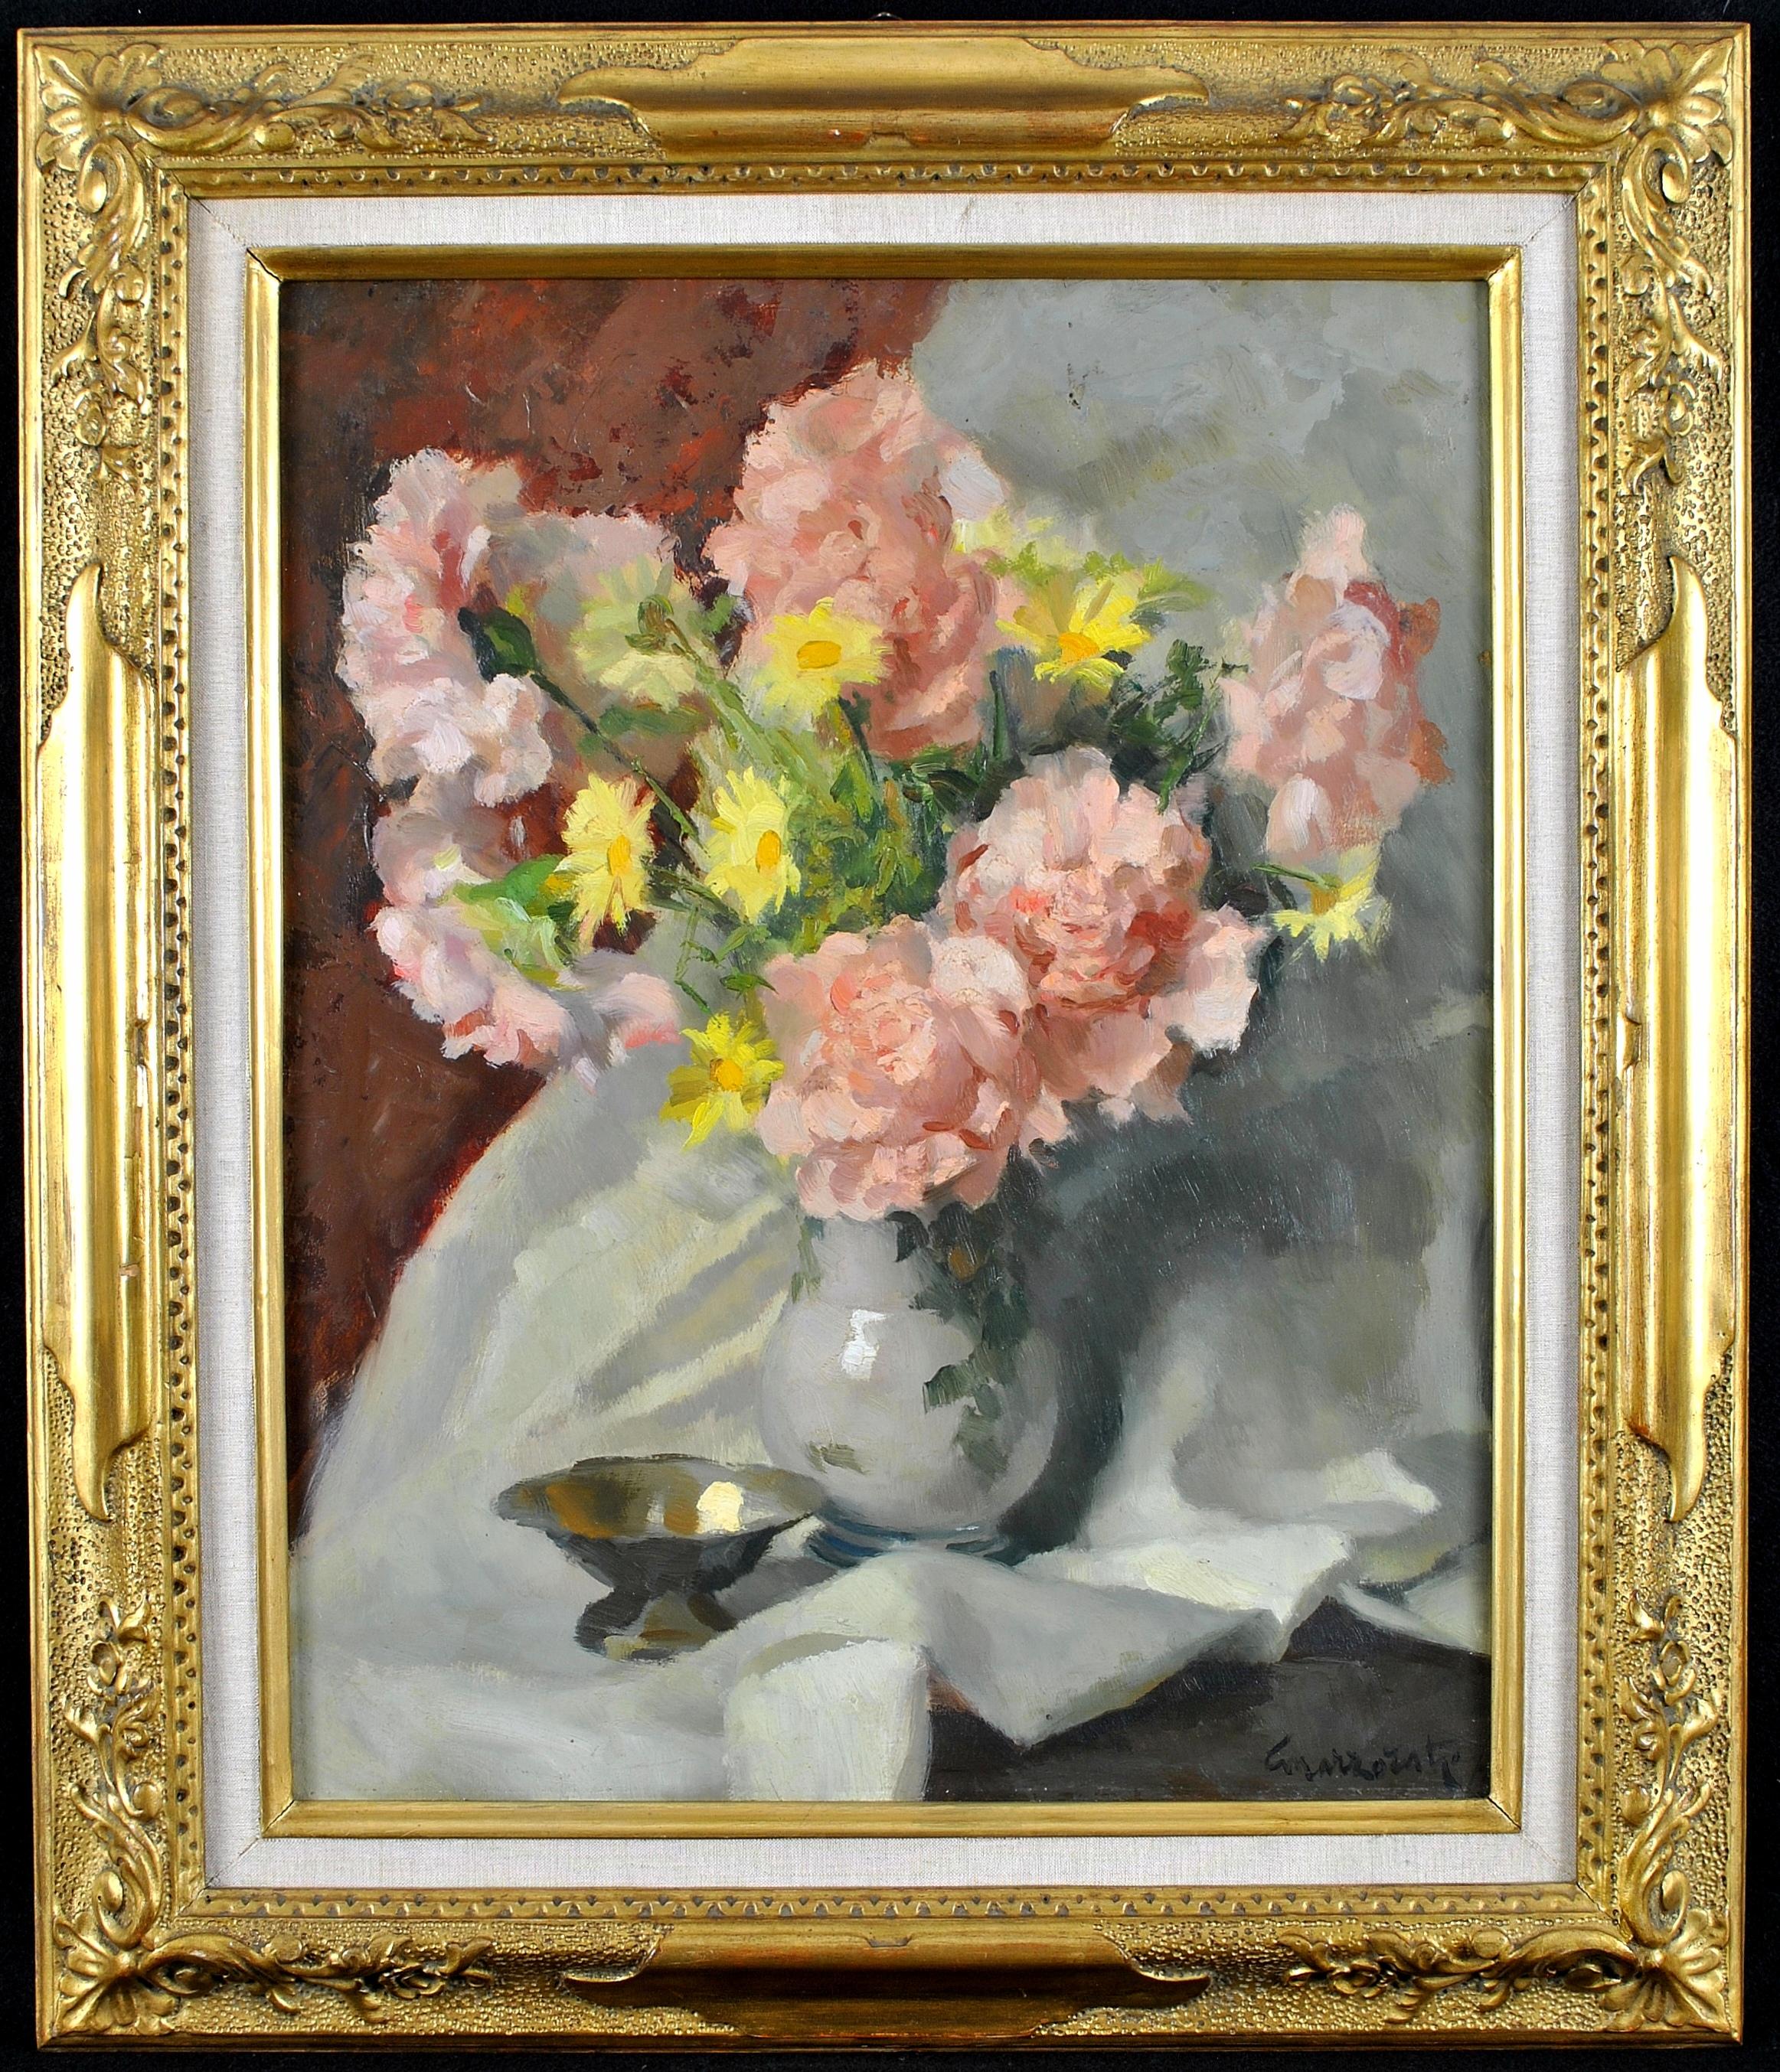 Carlo Marzorati Still-Life Painting - Roses & Wildflowers - 20th Century Italian Impressionist Still Life Oil Painting